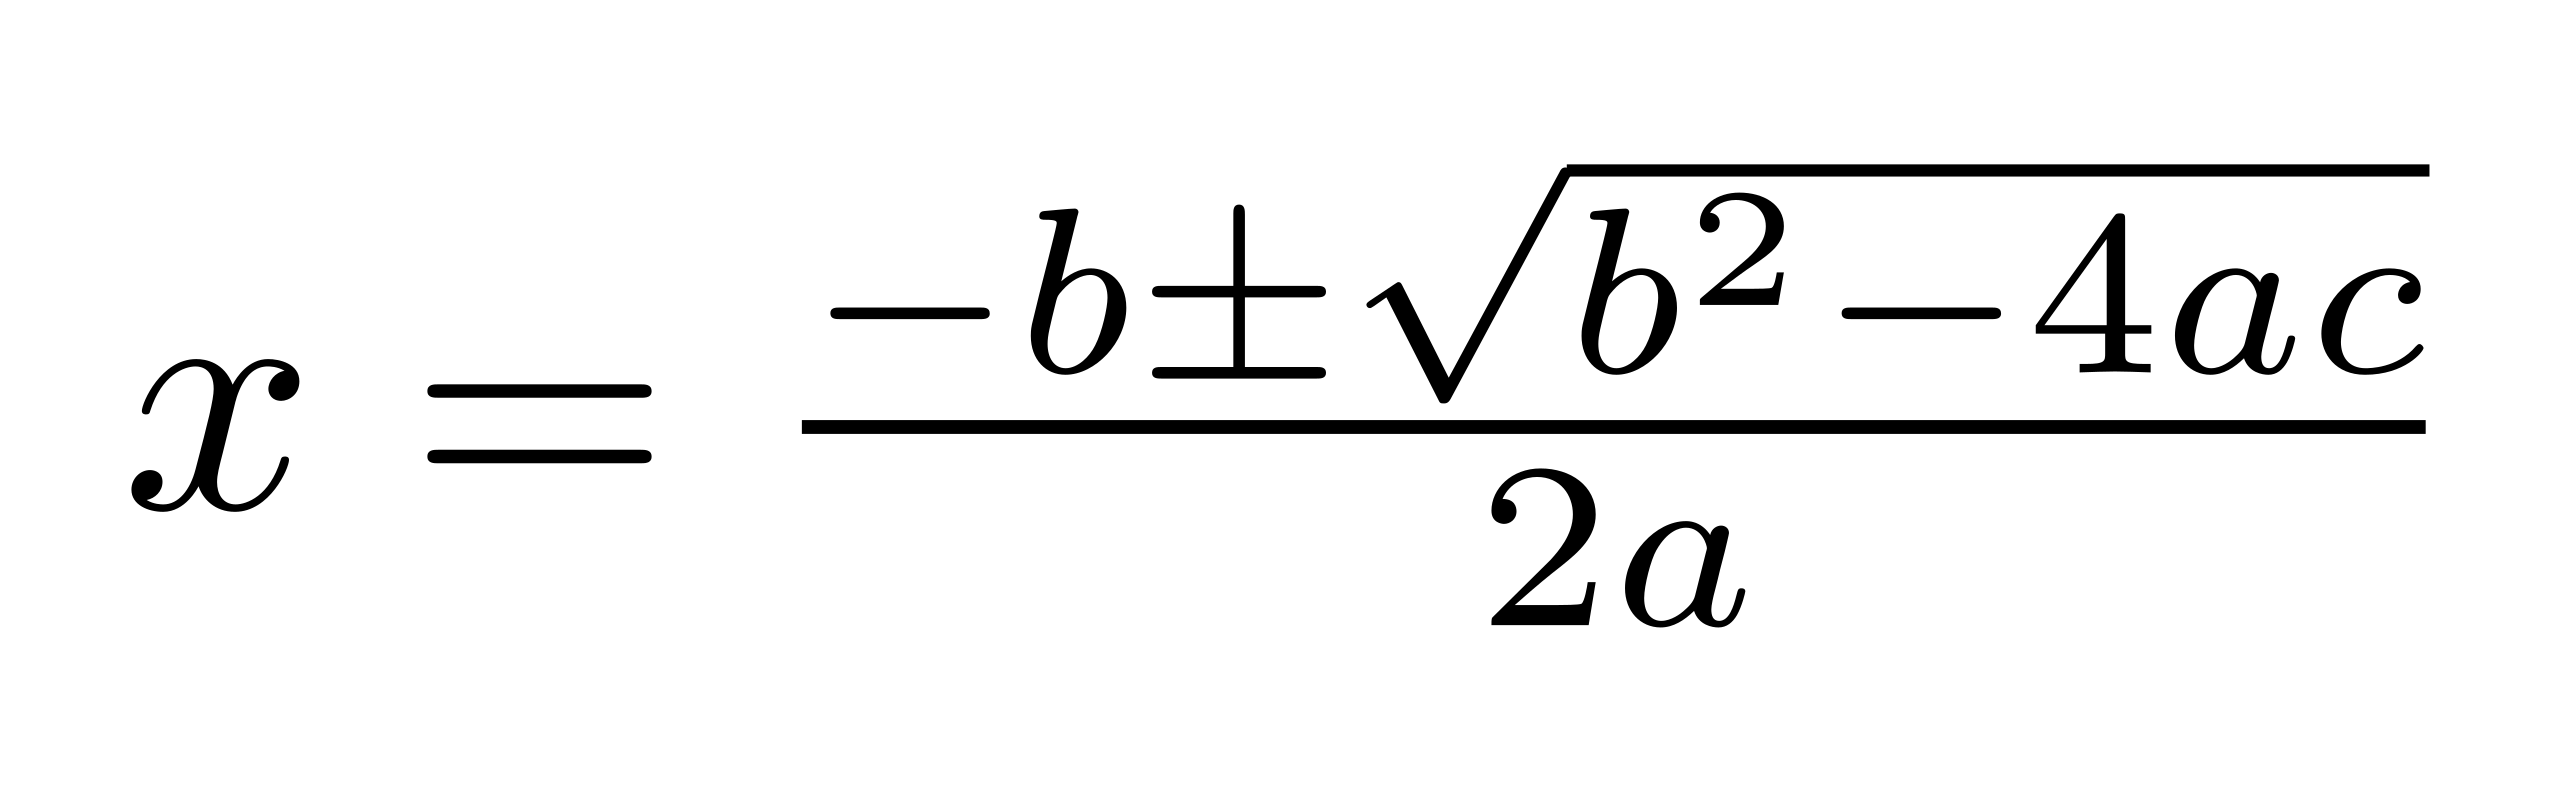 Image of the quadratic formula.